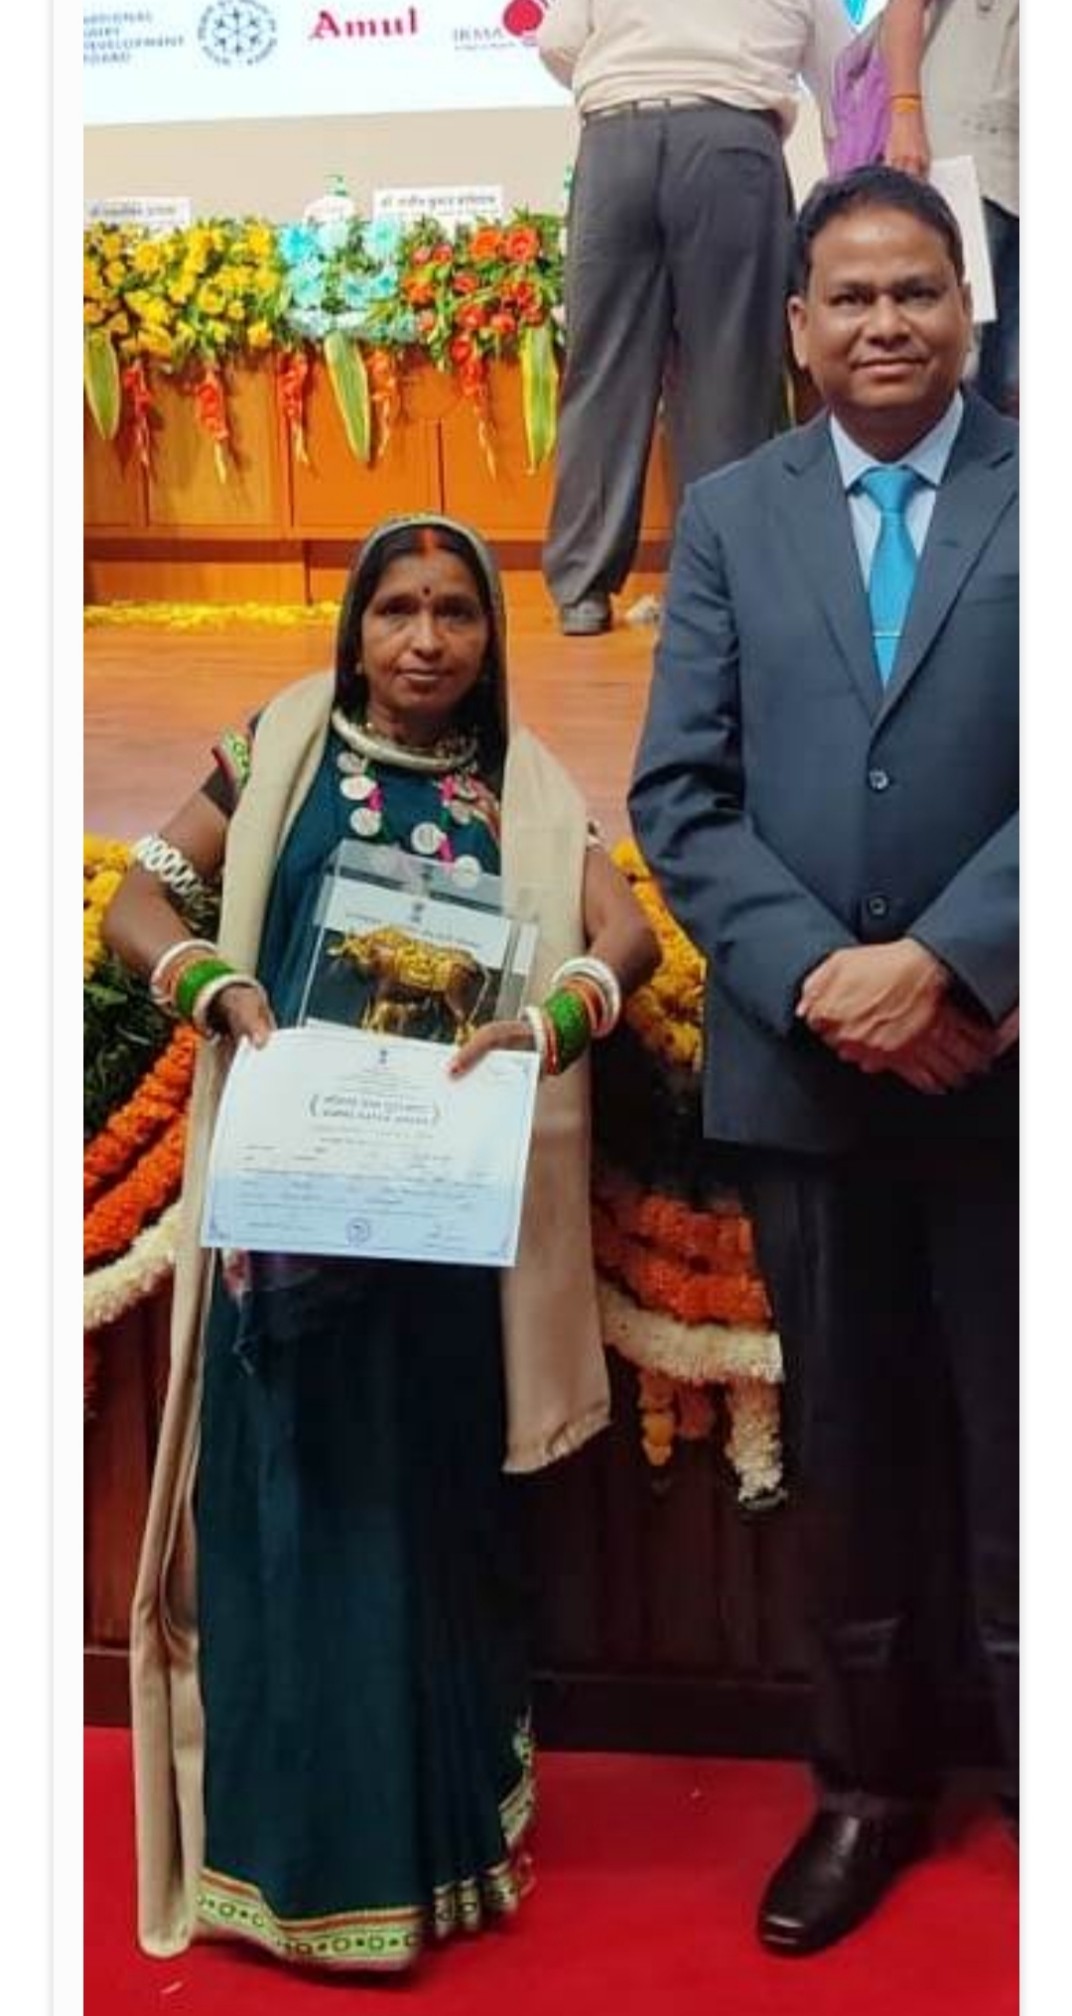 रायपुर : छत्तीसगढ़ की पशुपालक श्रीमती माधुरी जंघेल और तकनीशियन दुलारू राम साहू को मिला राष्ट्रीय गोपाल रत्न पुरस्कार